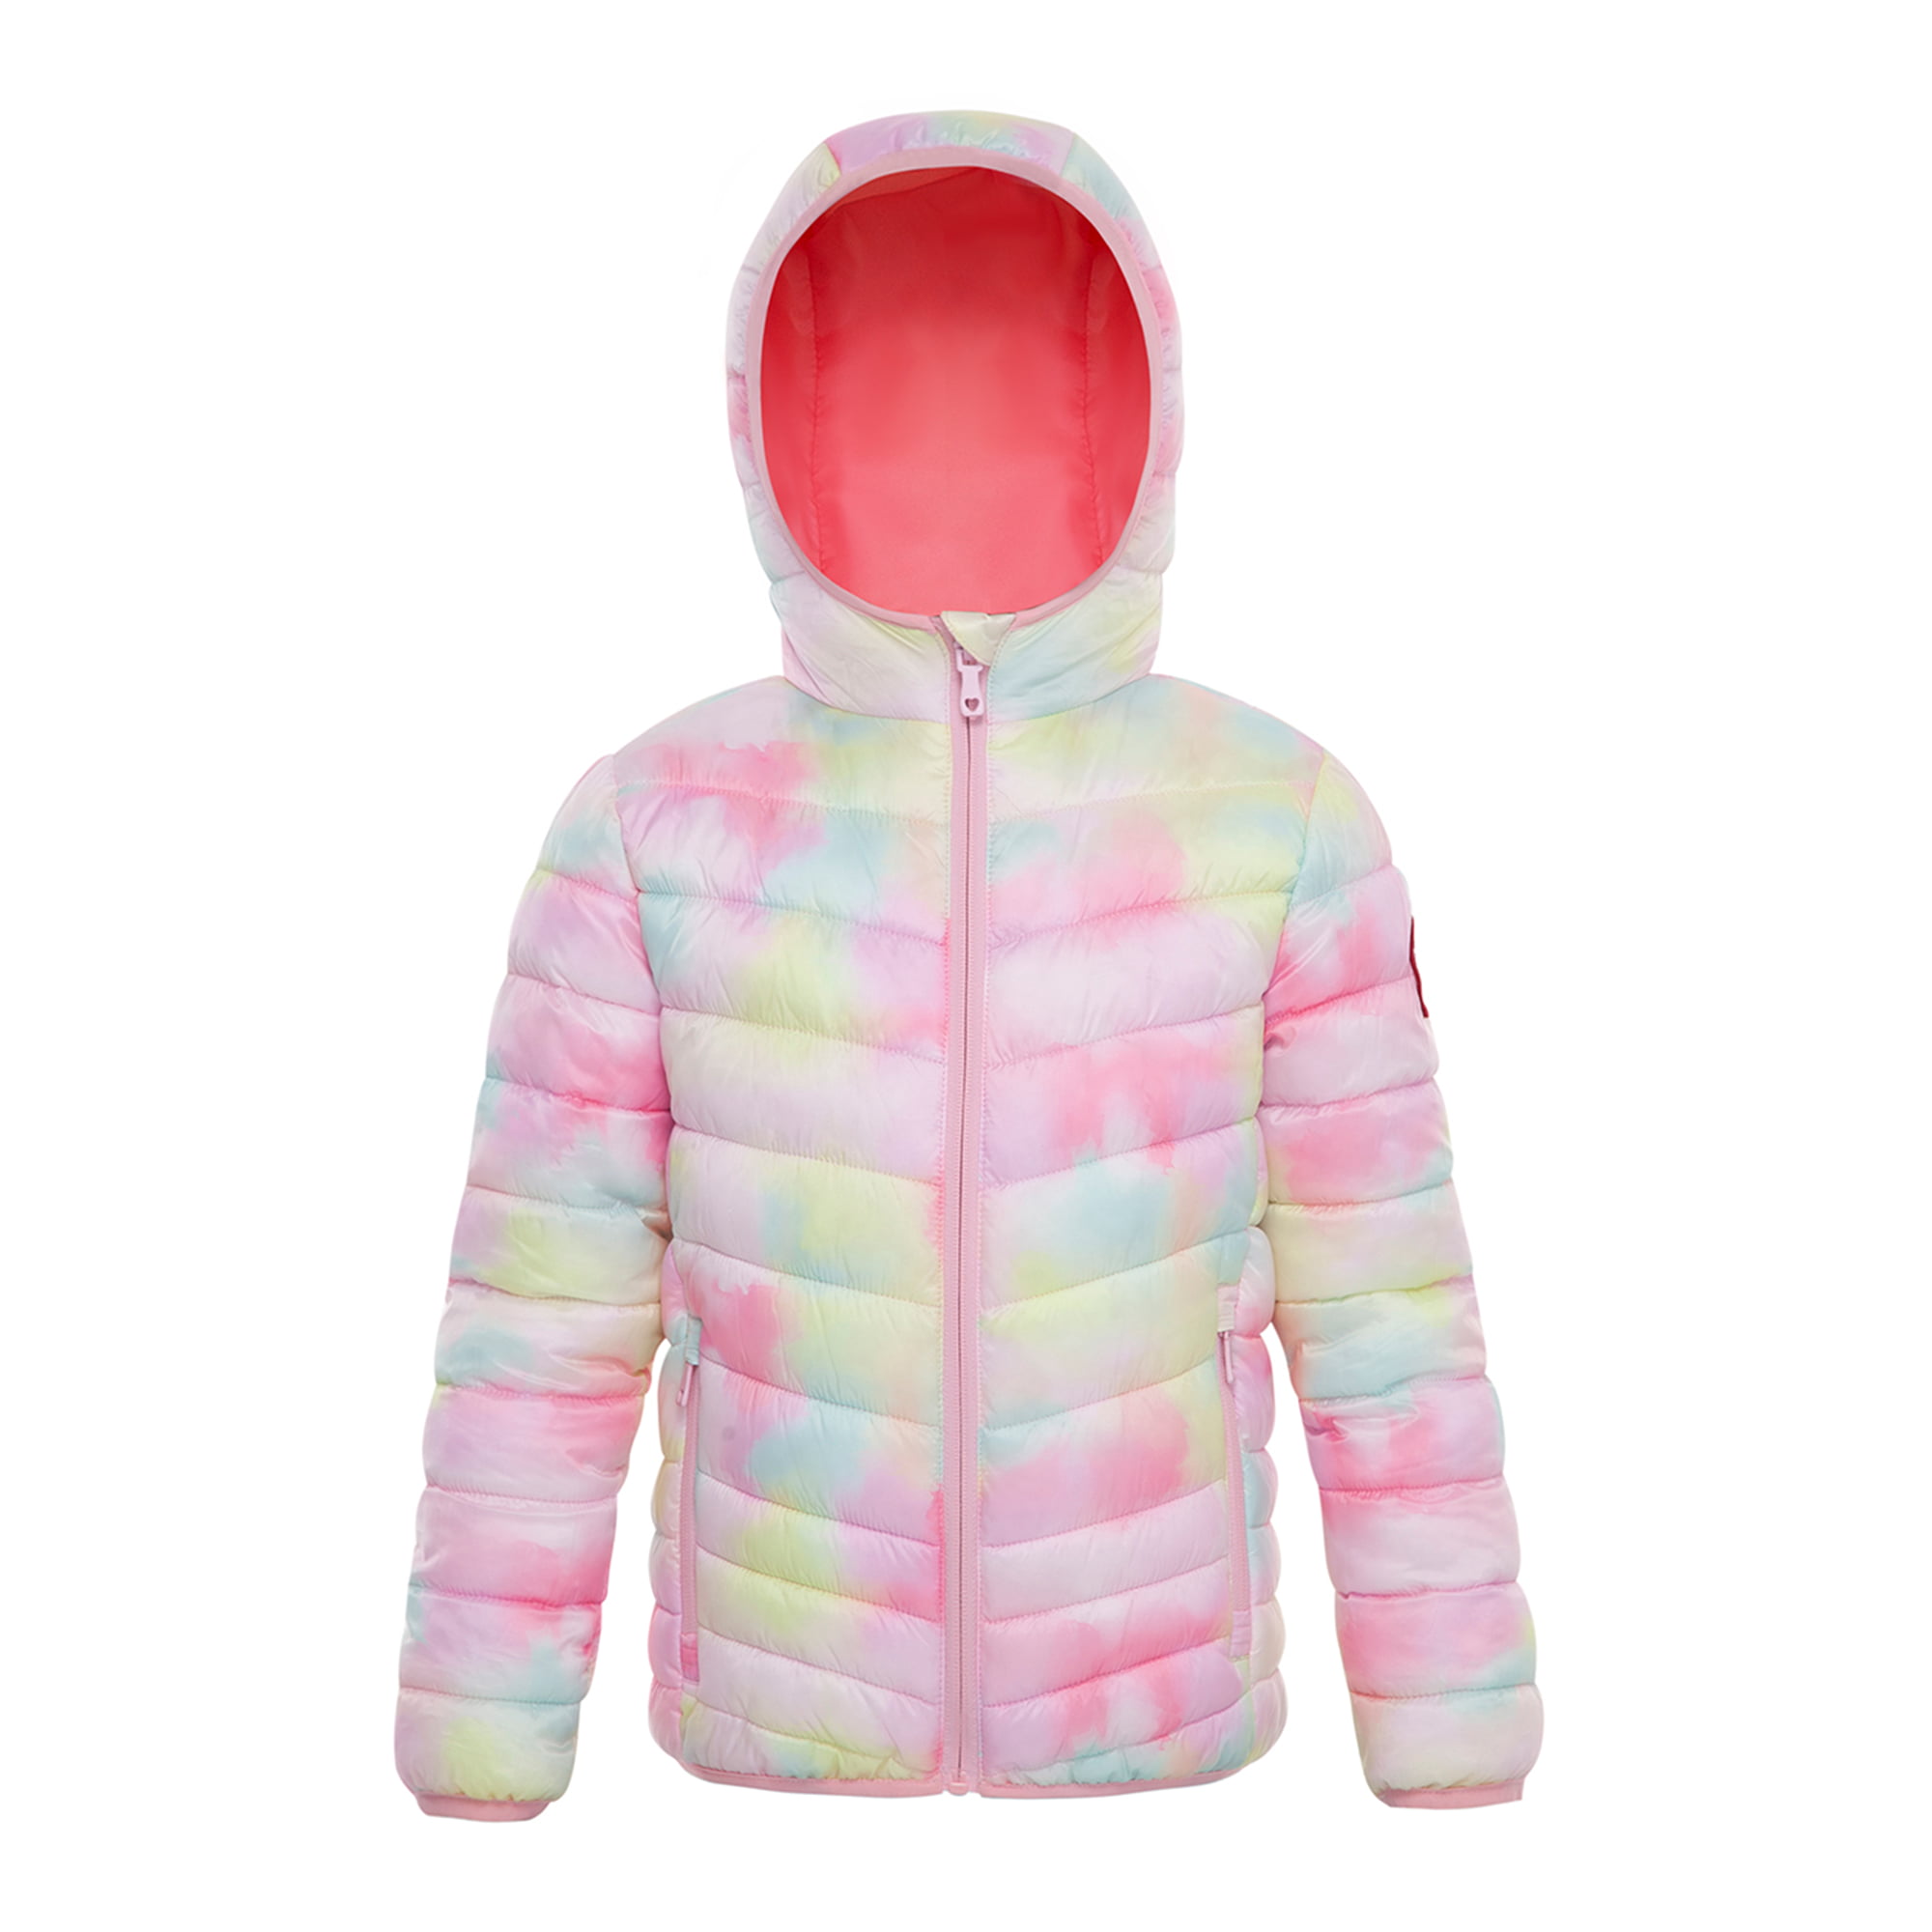 Rokka&Rolla Girls' Reversible Light Puffer Jacket Coat-Pink Marble, Size 10-12